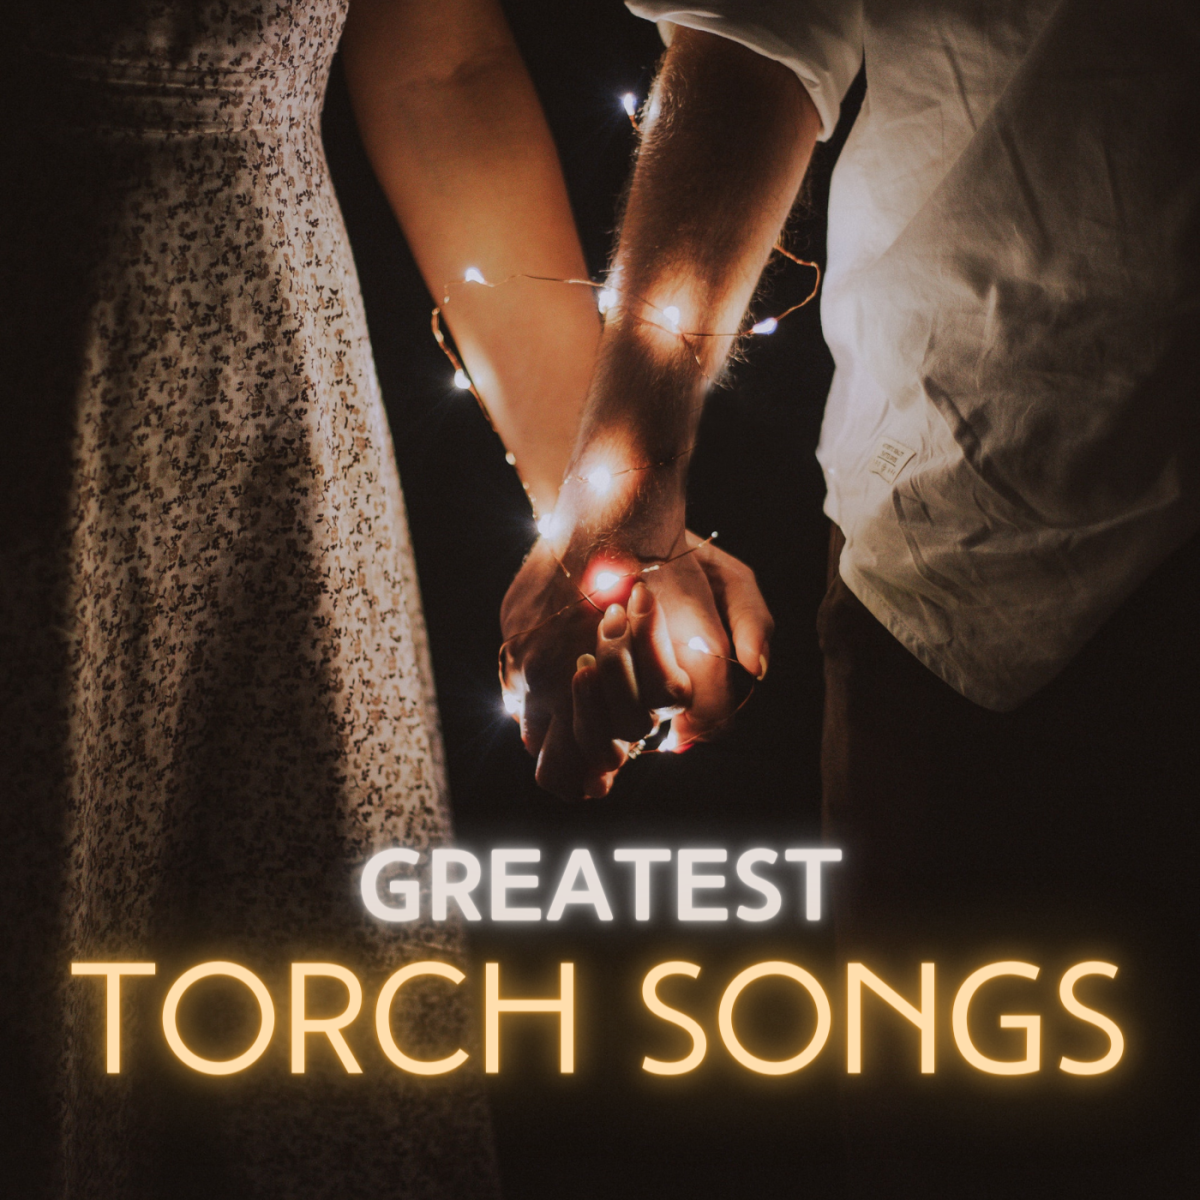 100 Best Torch Songs